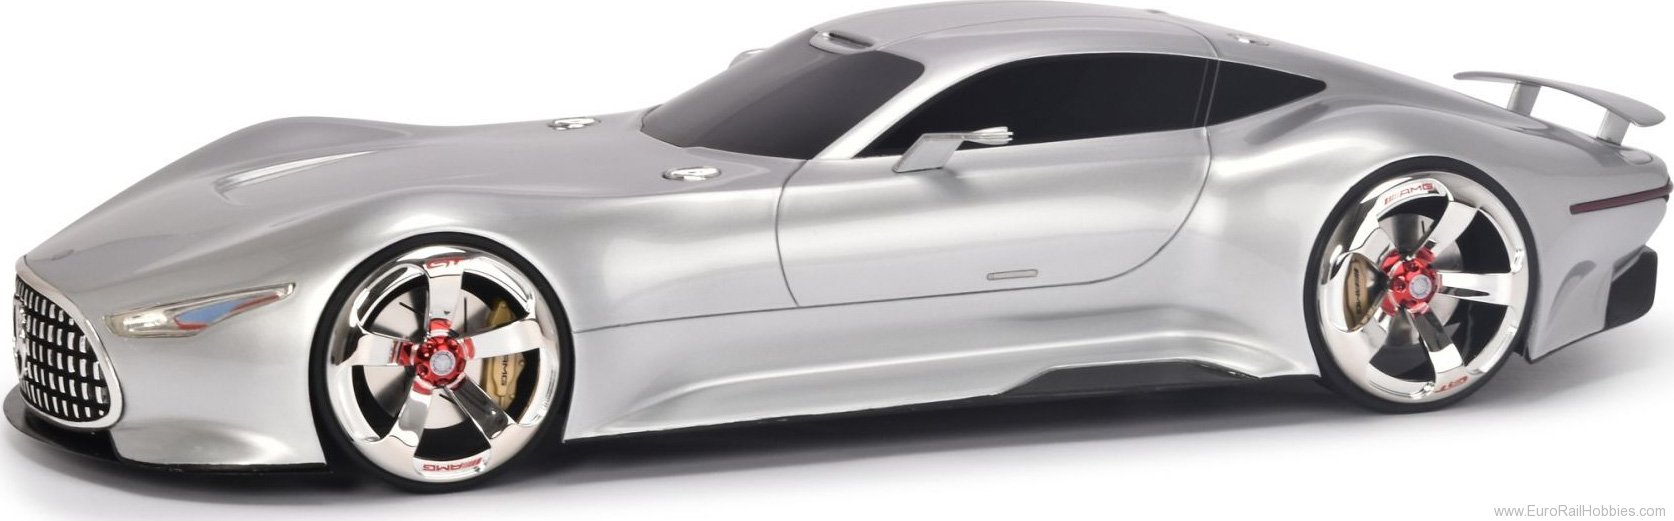 Schuco 450046400 MB AMG Vision GT silver (PRO.R 12)